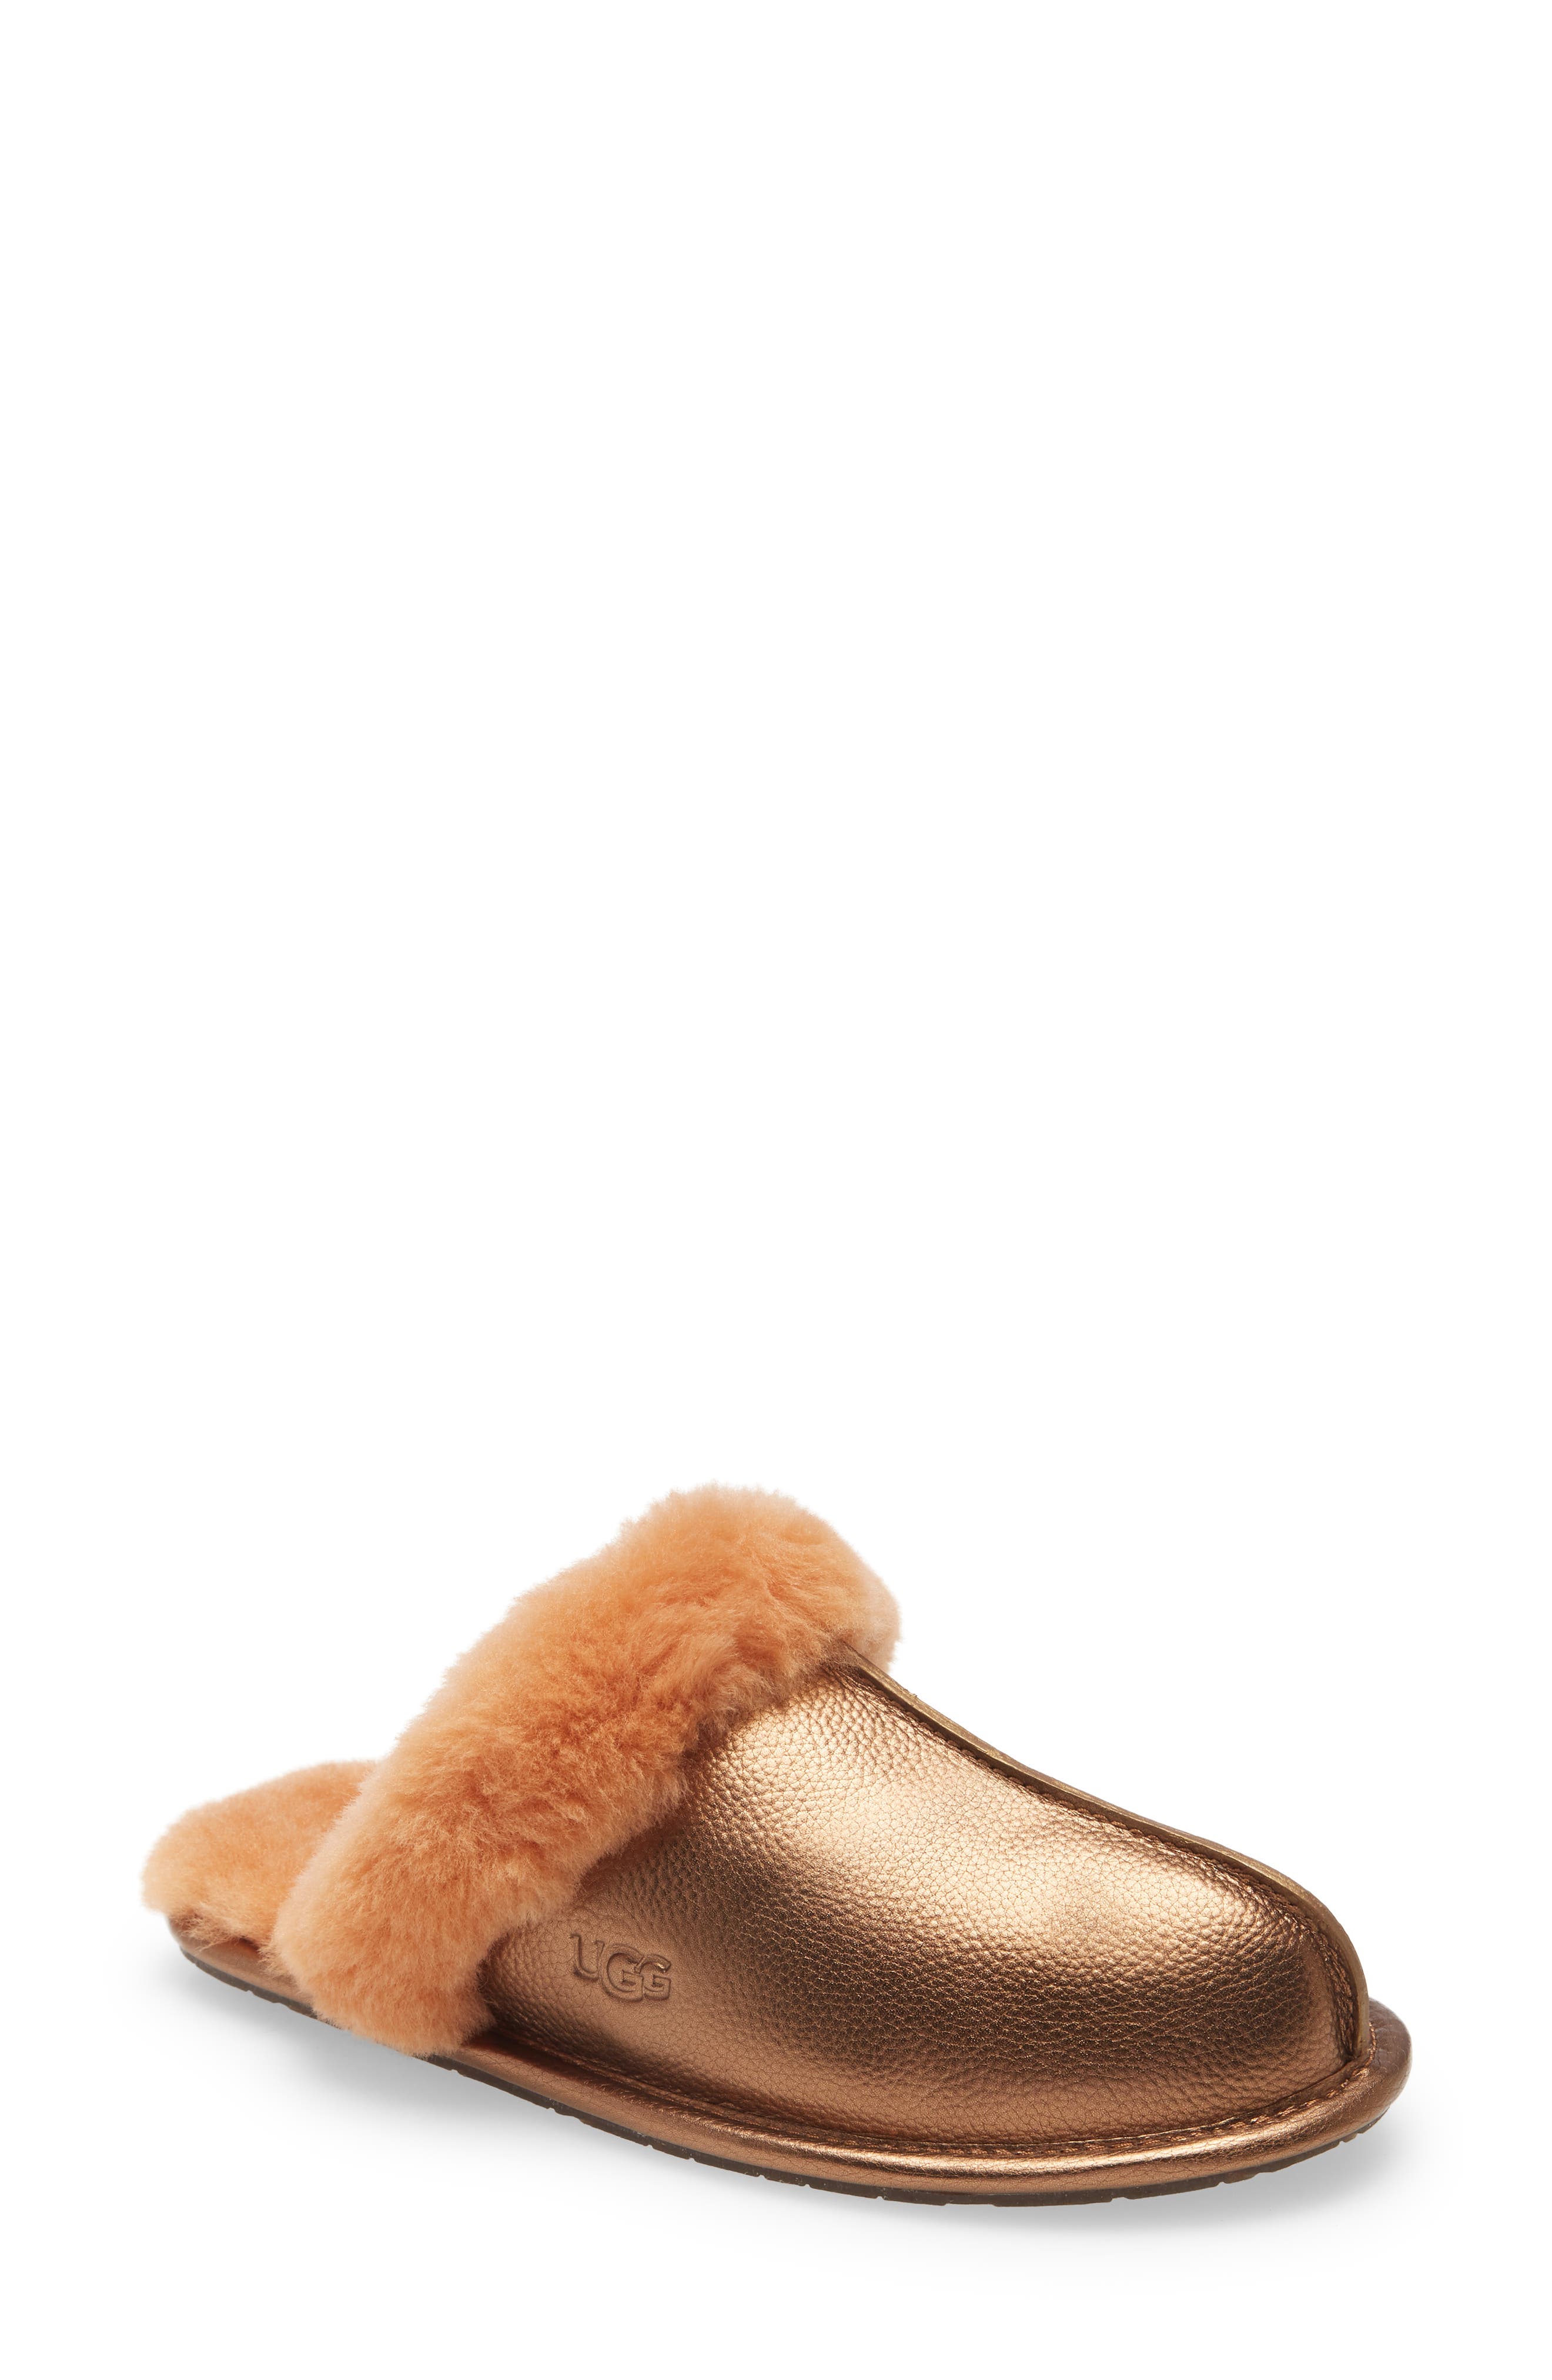 sperry fuzzy slippers